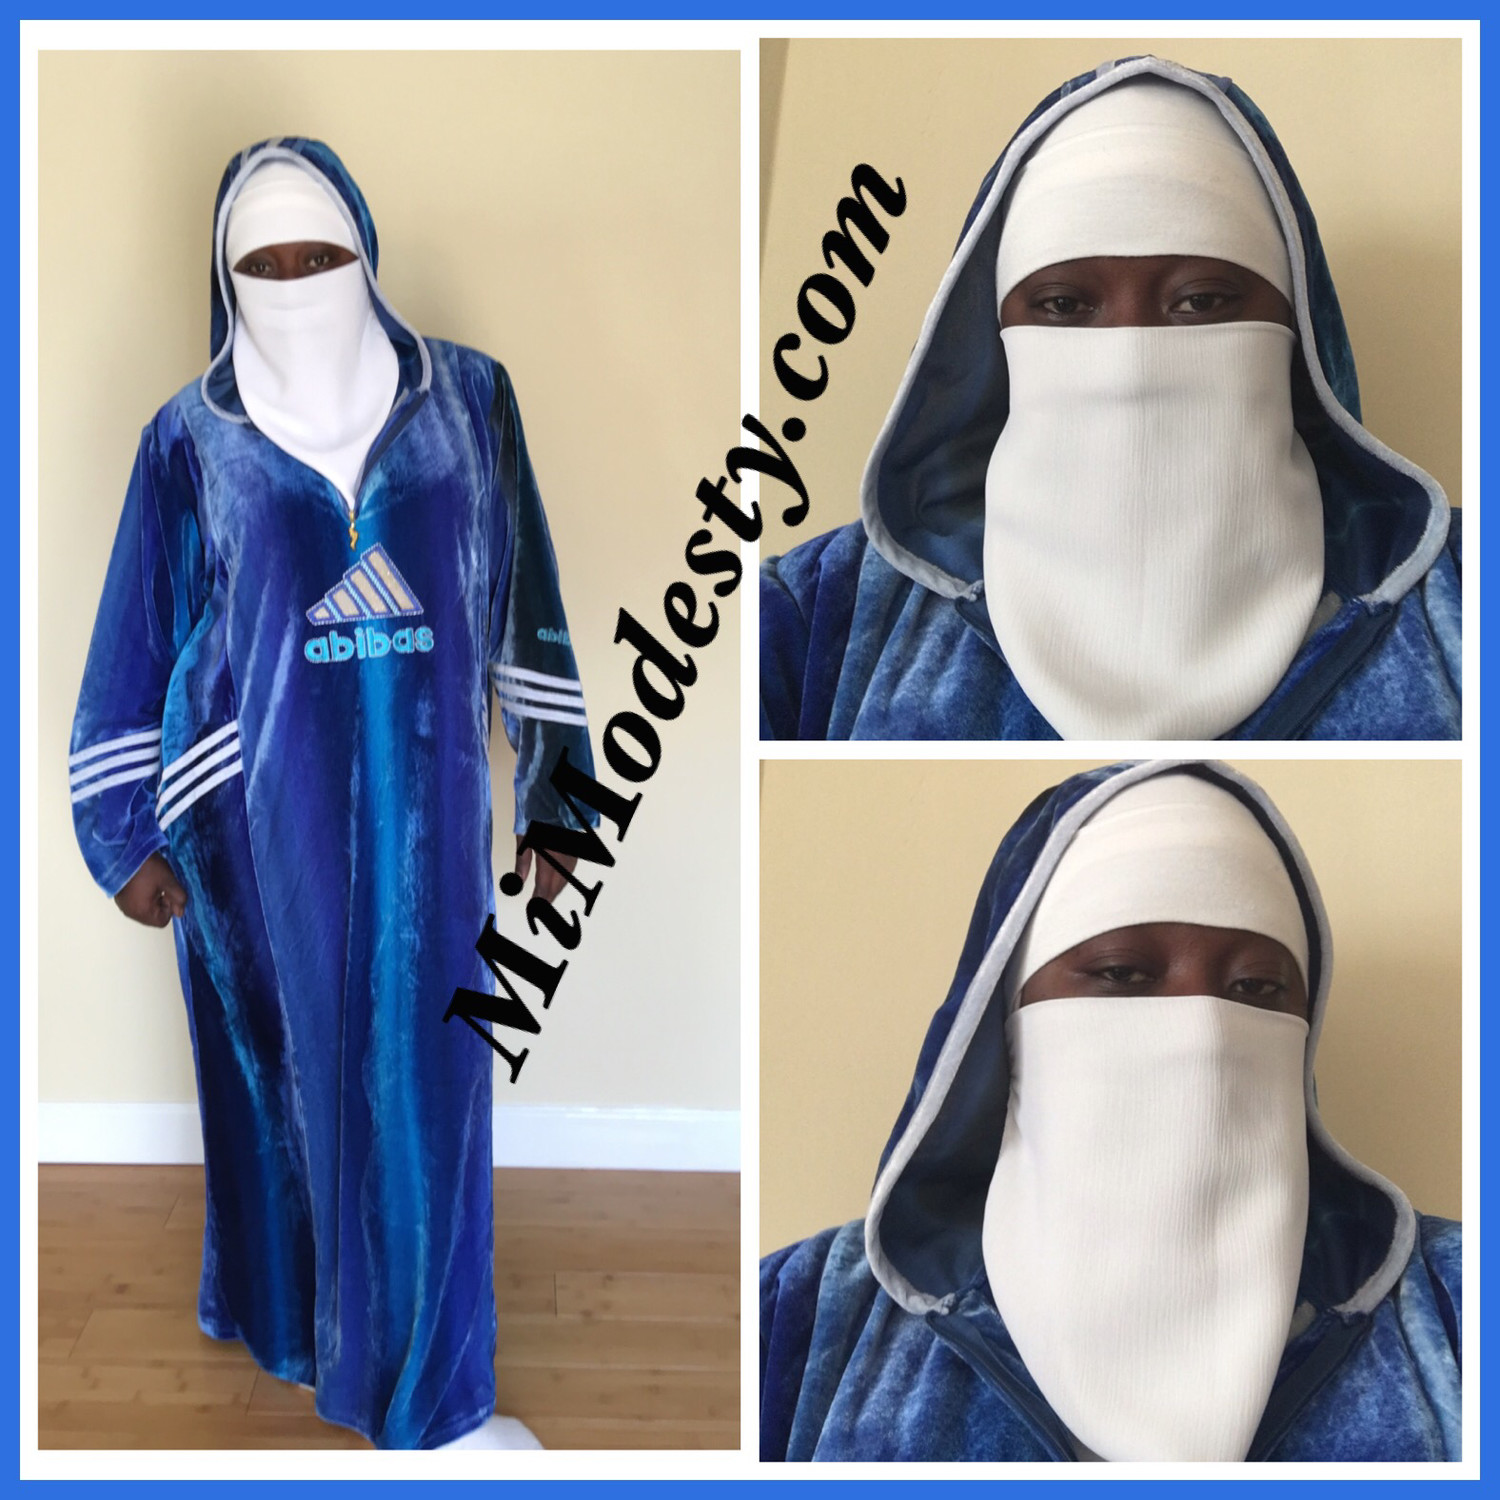 Half Niqabs